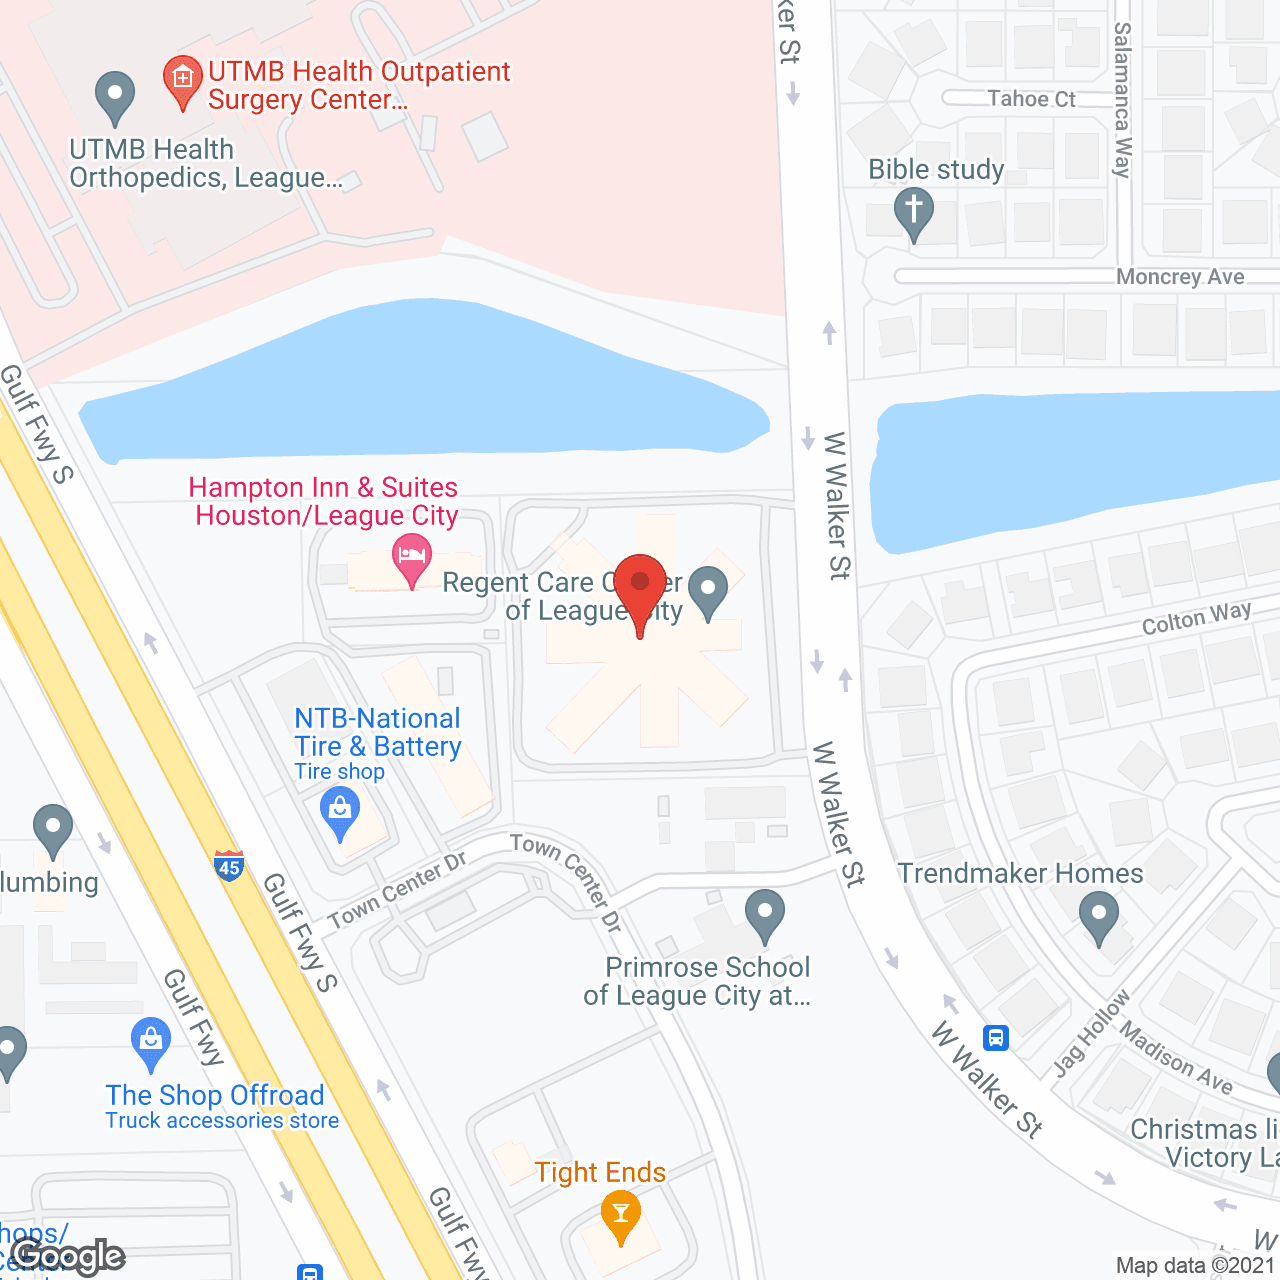 Regent Care Center of League City in google map